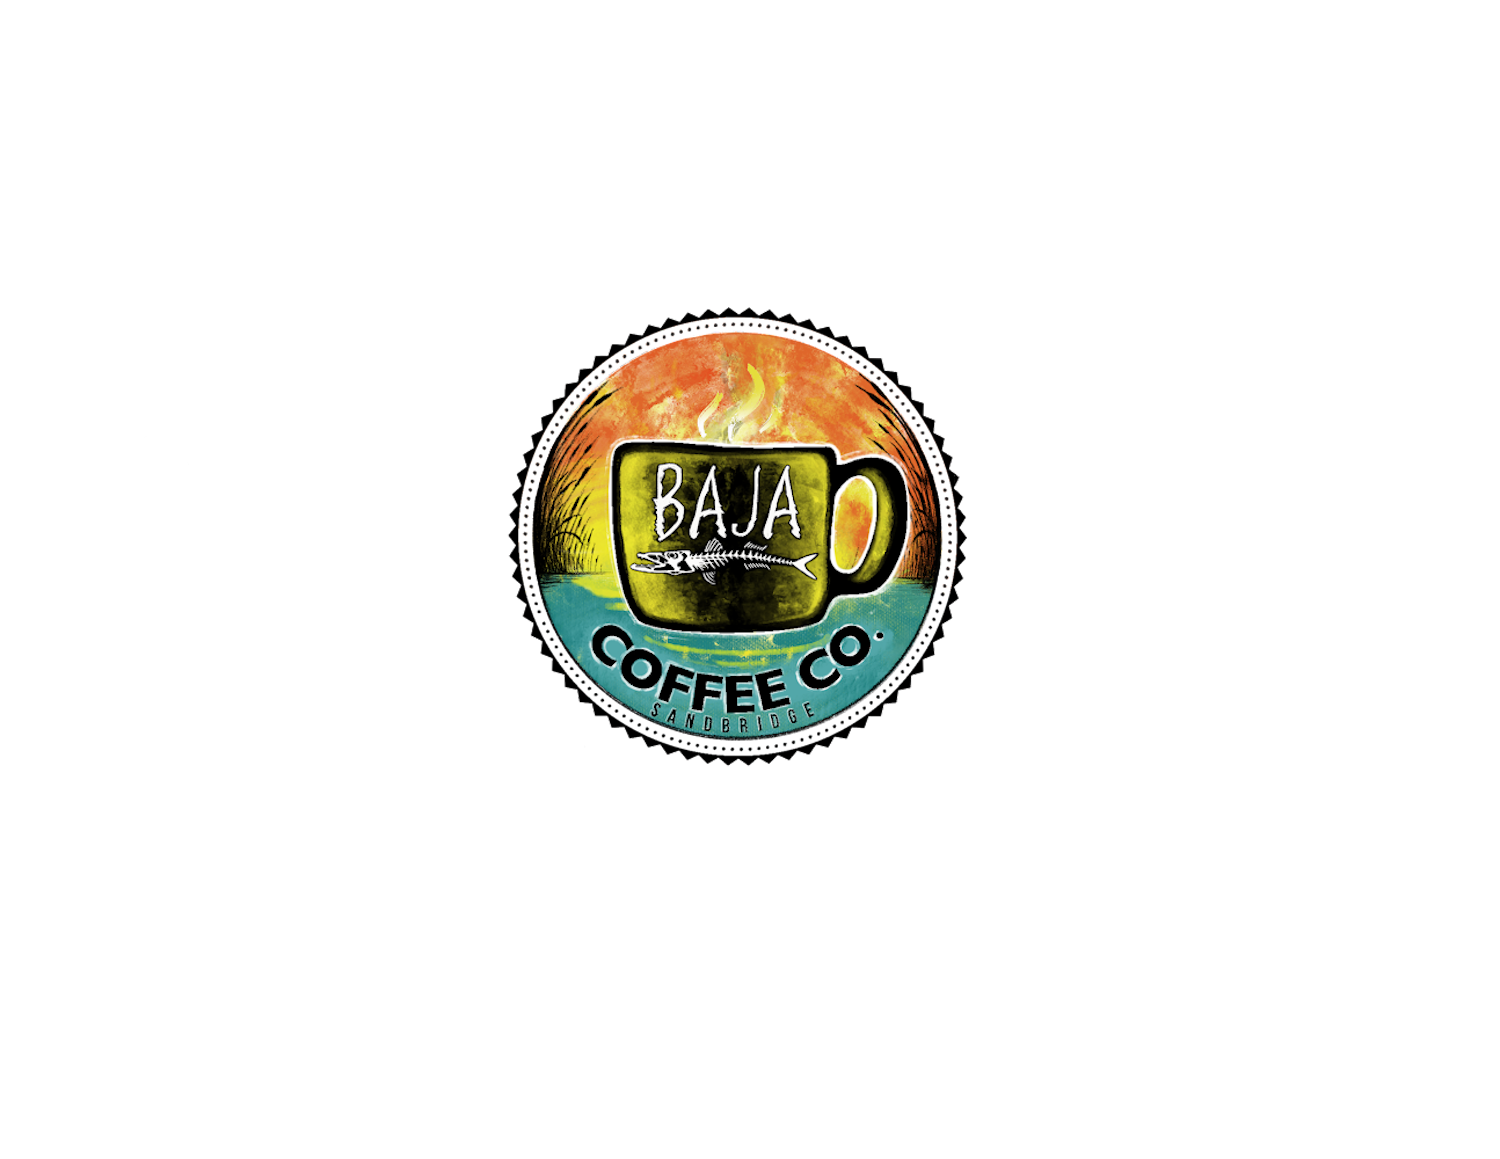 Baja Coffee Company